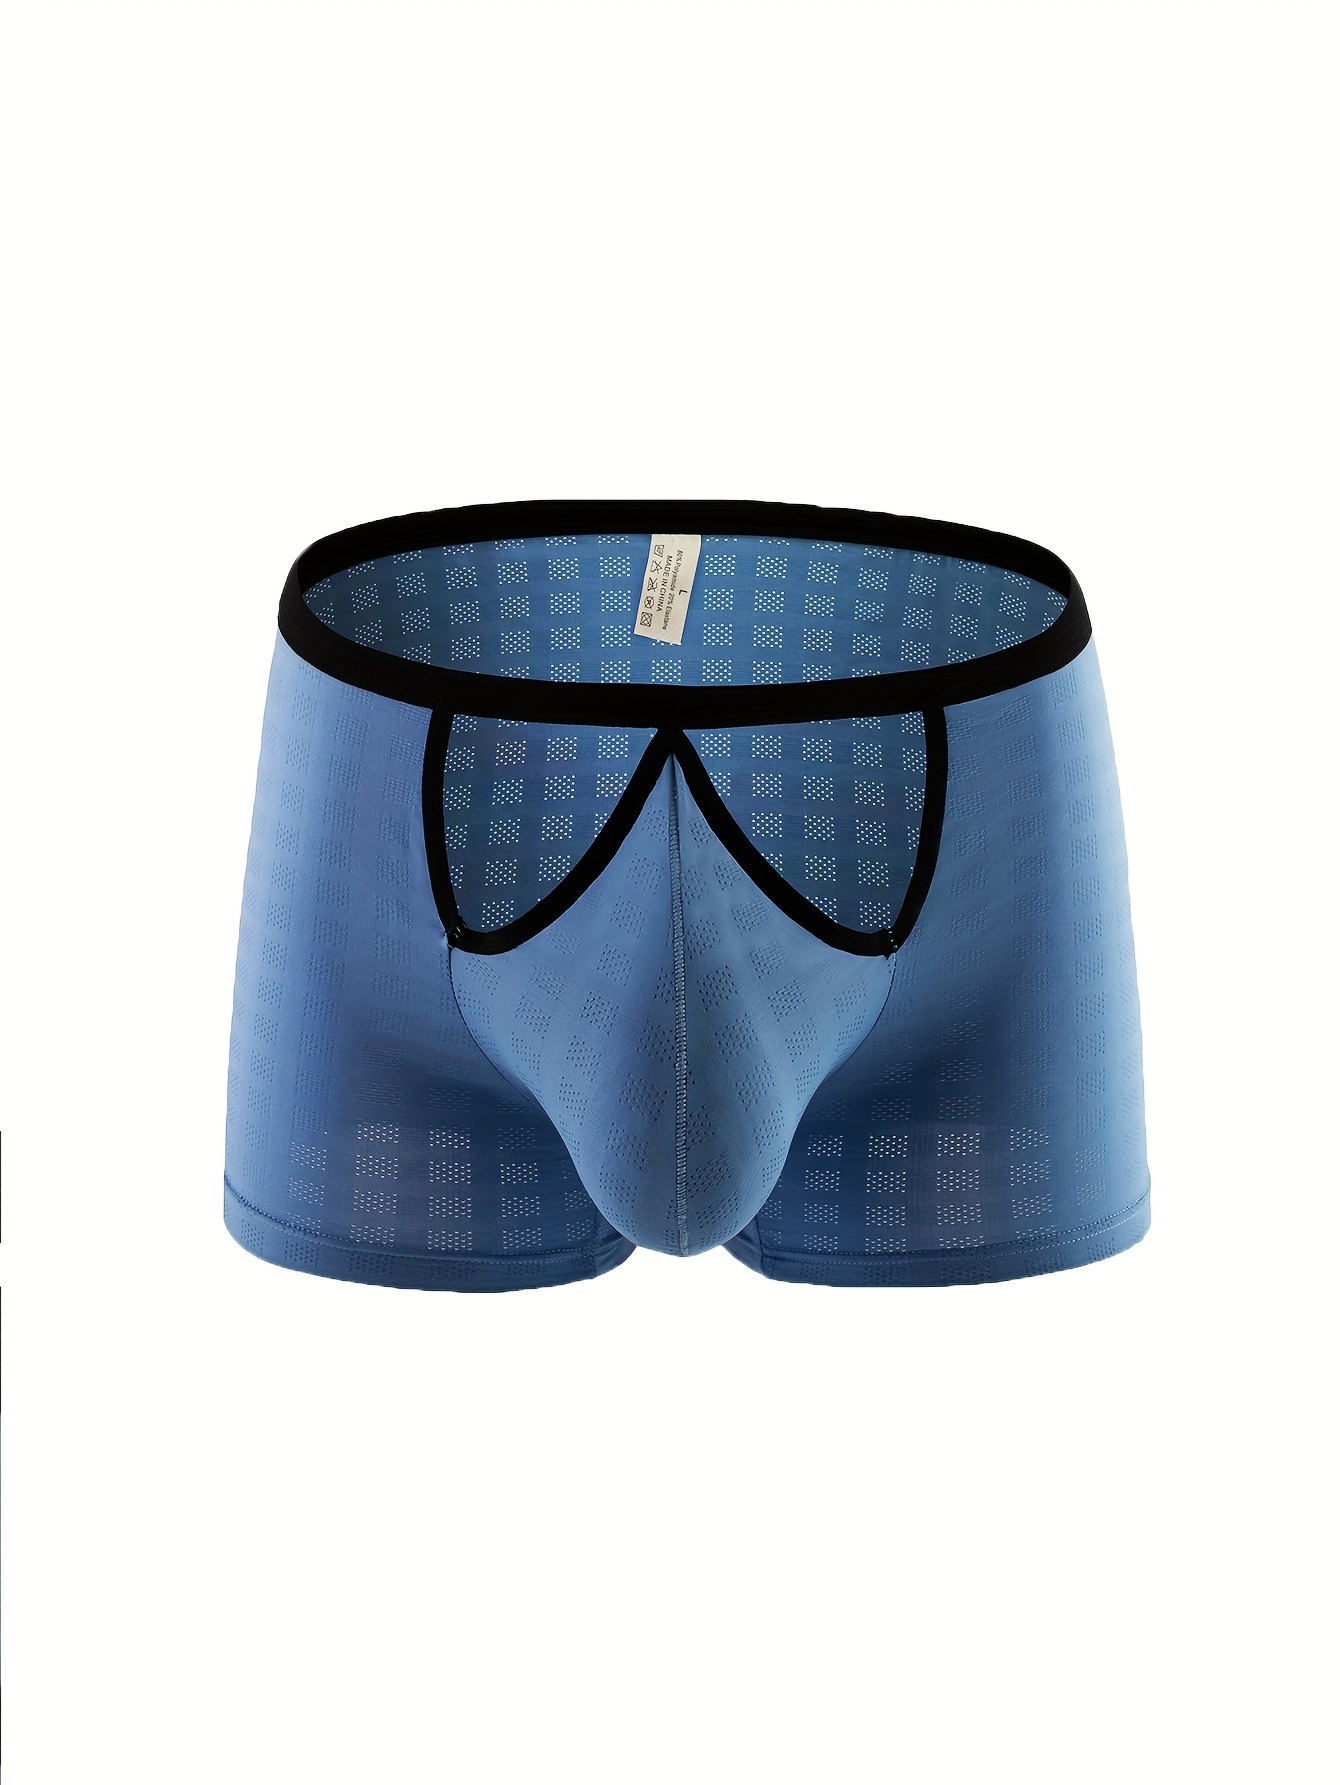 Men's Enhancing Underwear UK : Bulge Enhancing Boxers Briefs Thongs